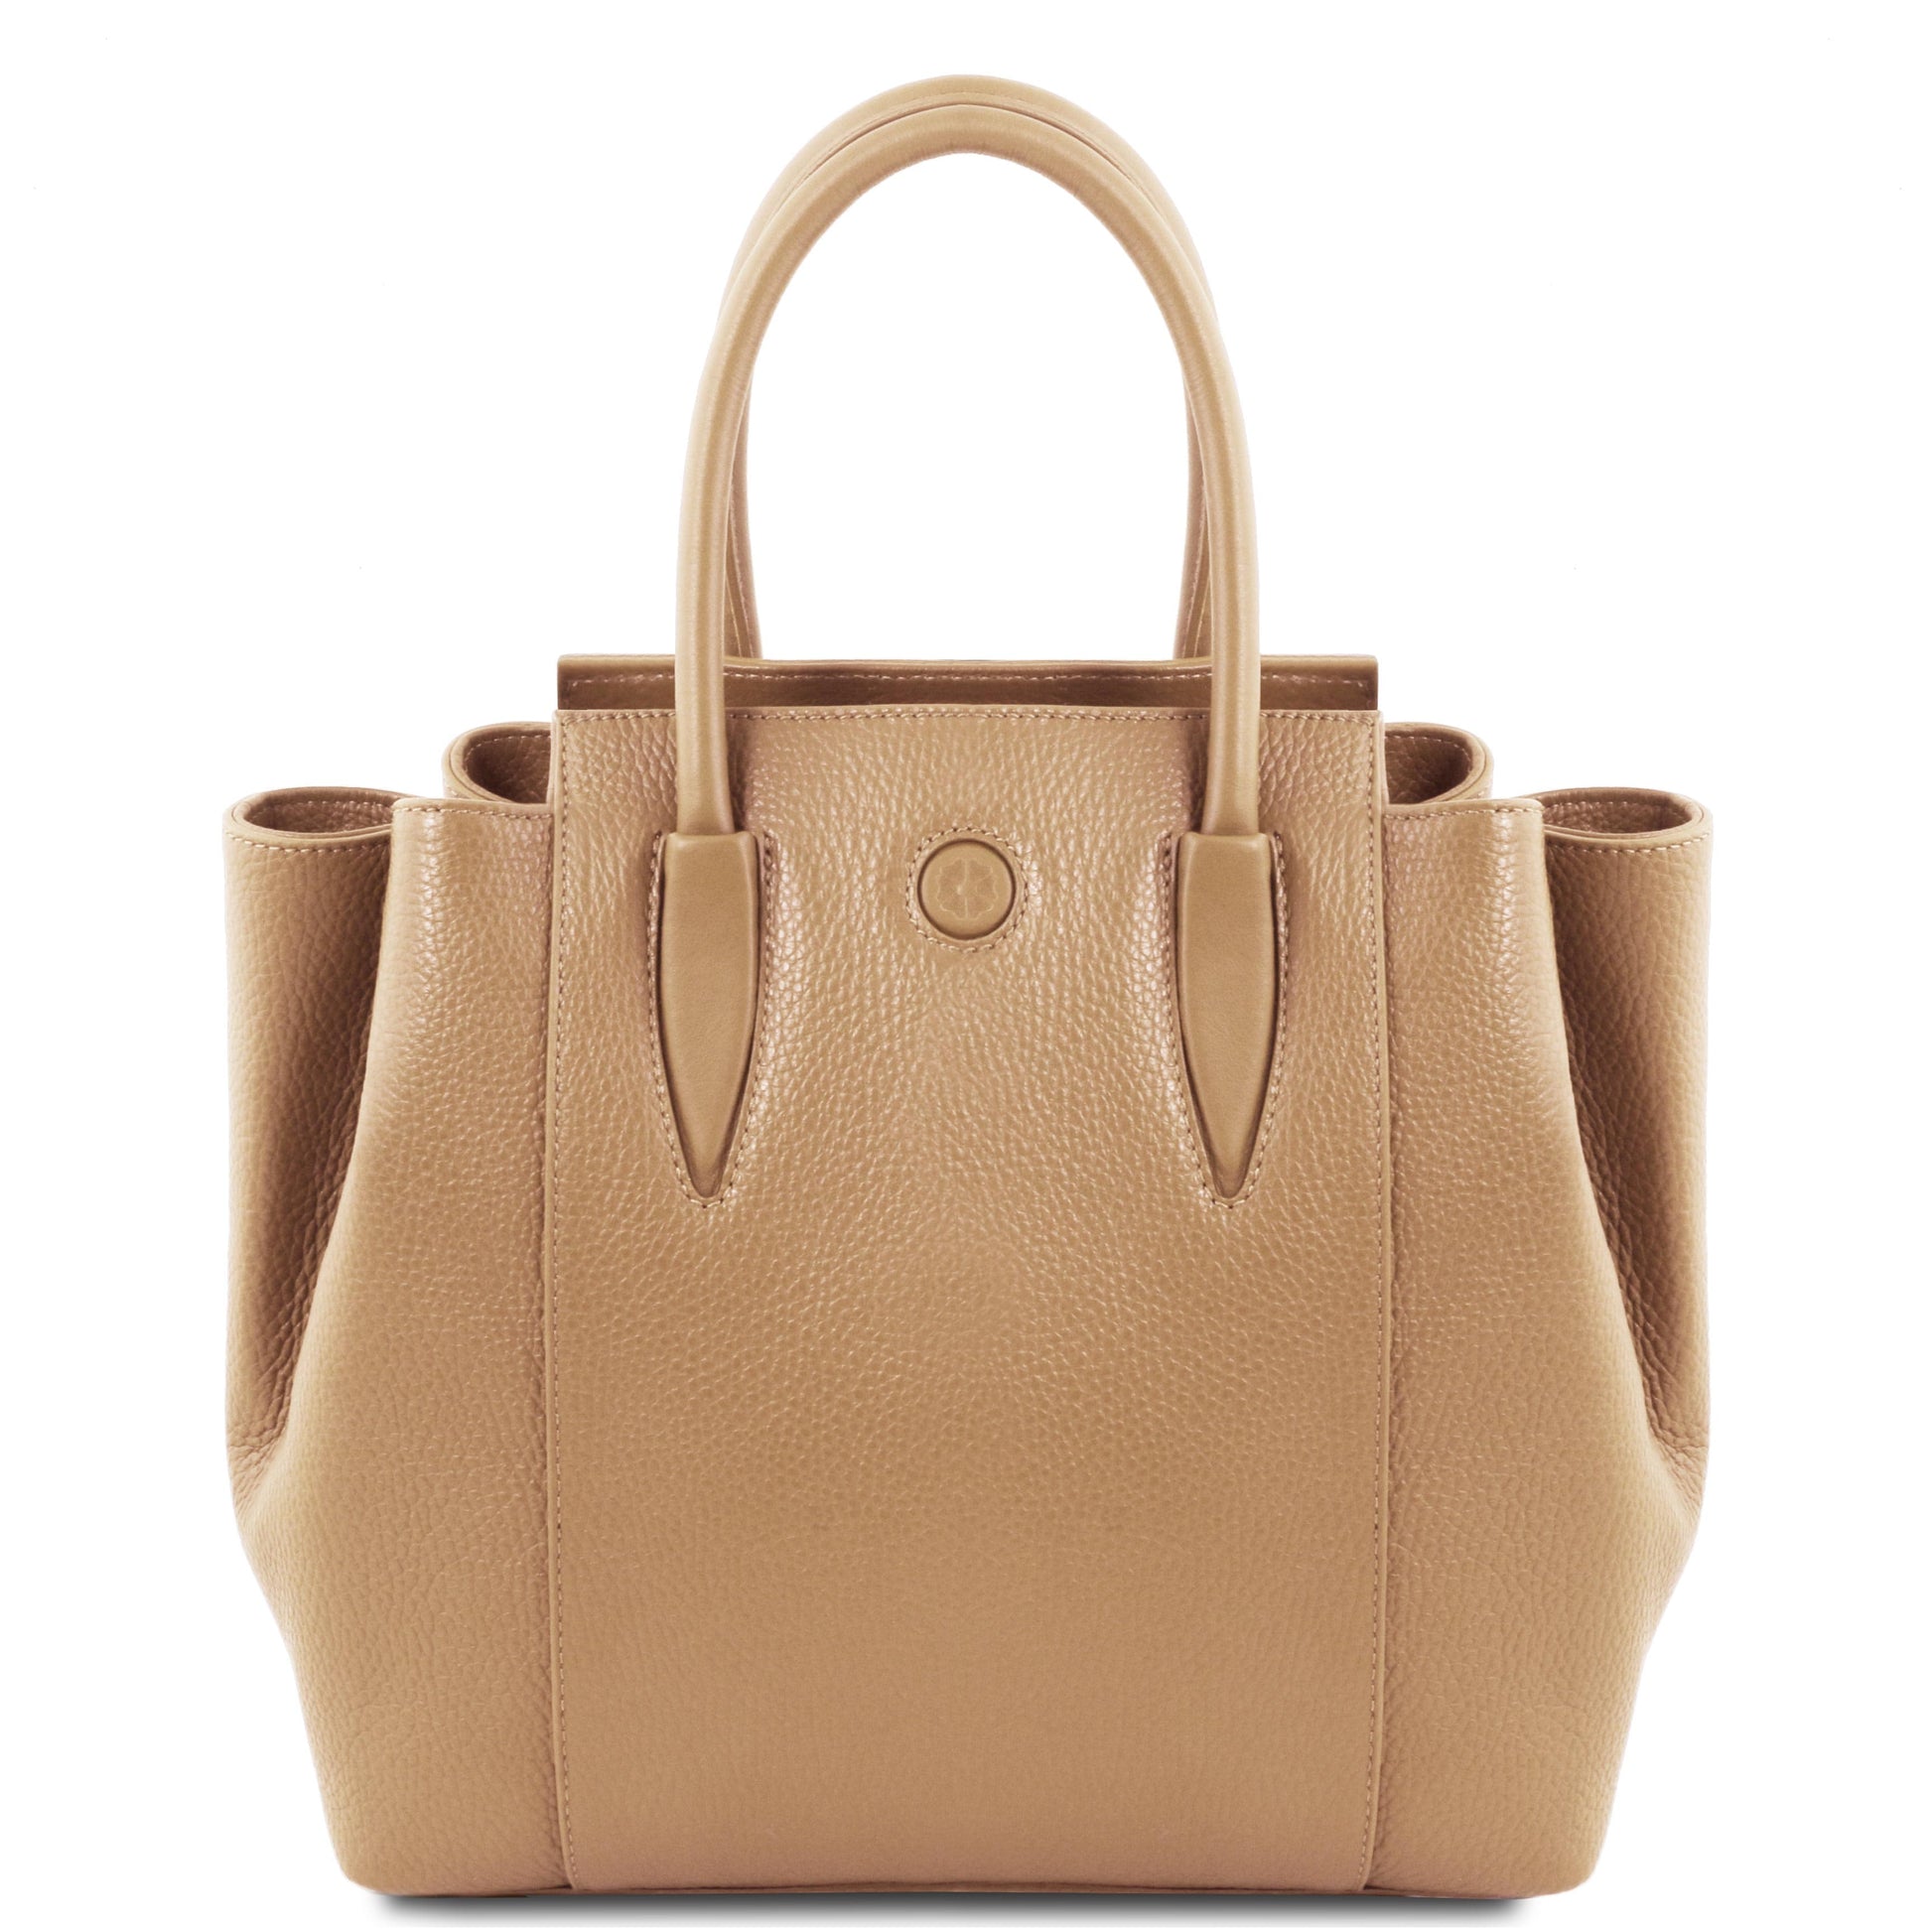 Tulipan - Leather handbag | TL141727 - Premium Leather handbags - Shop now at San Rocco Italia